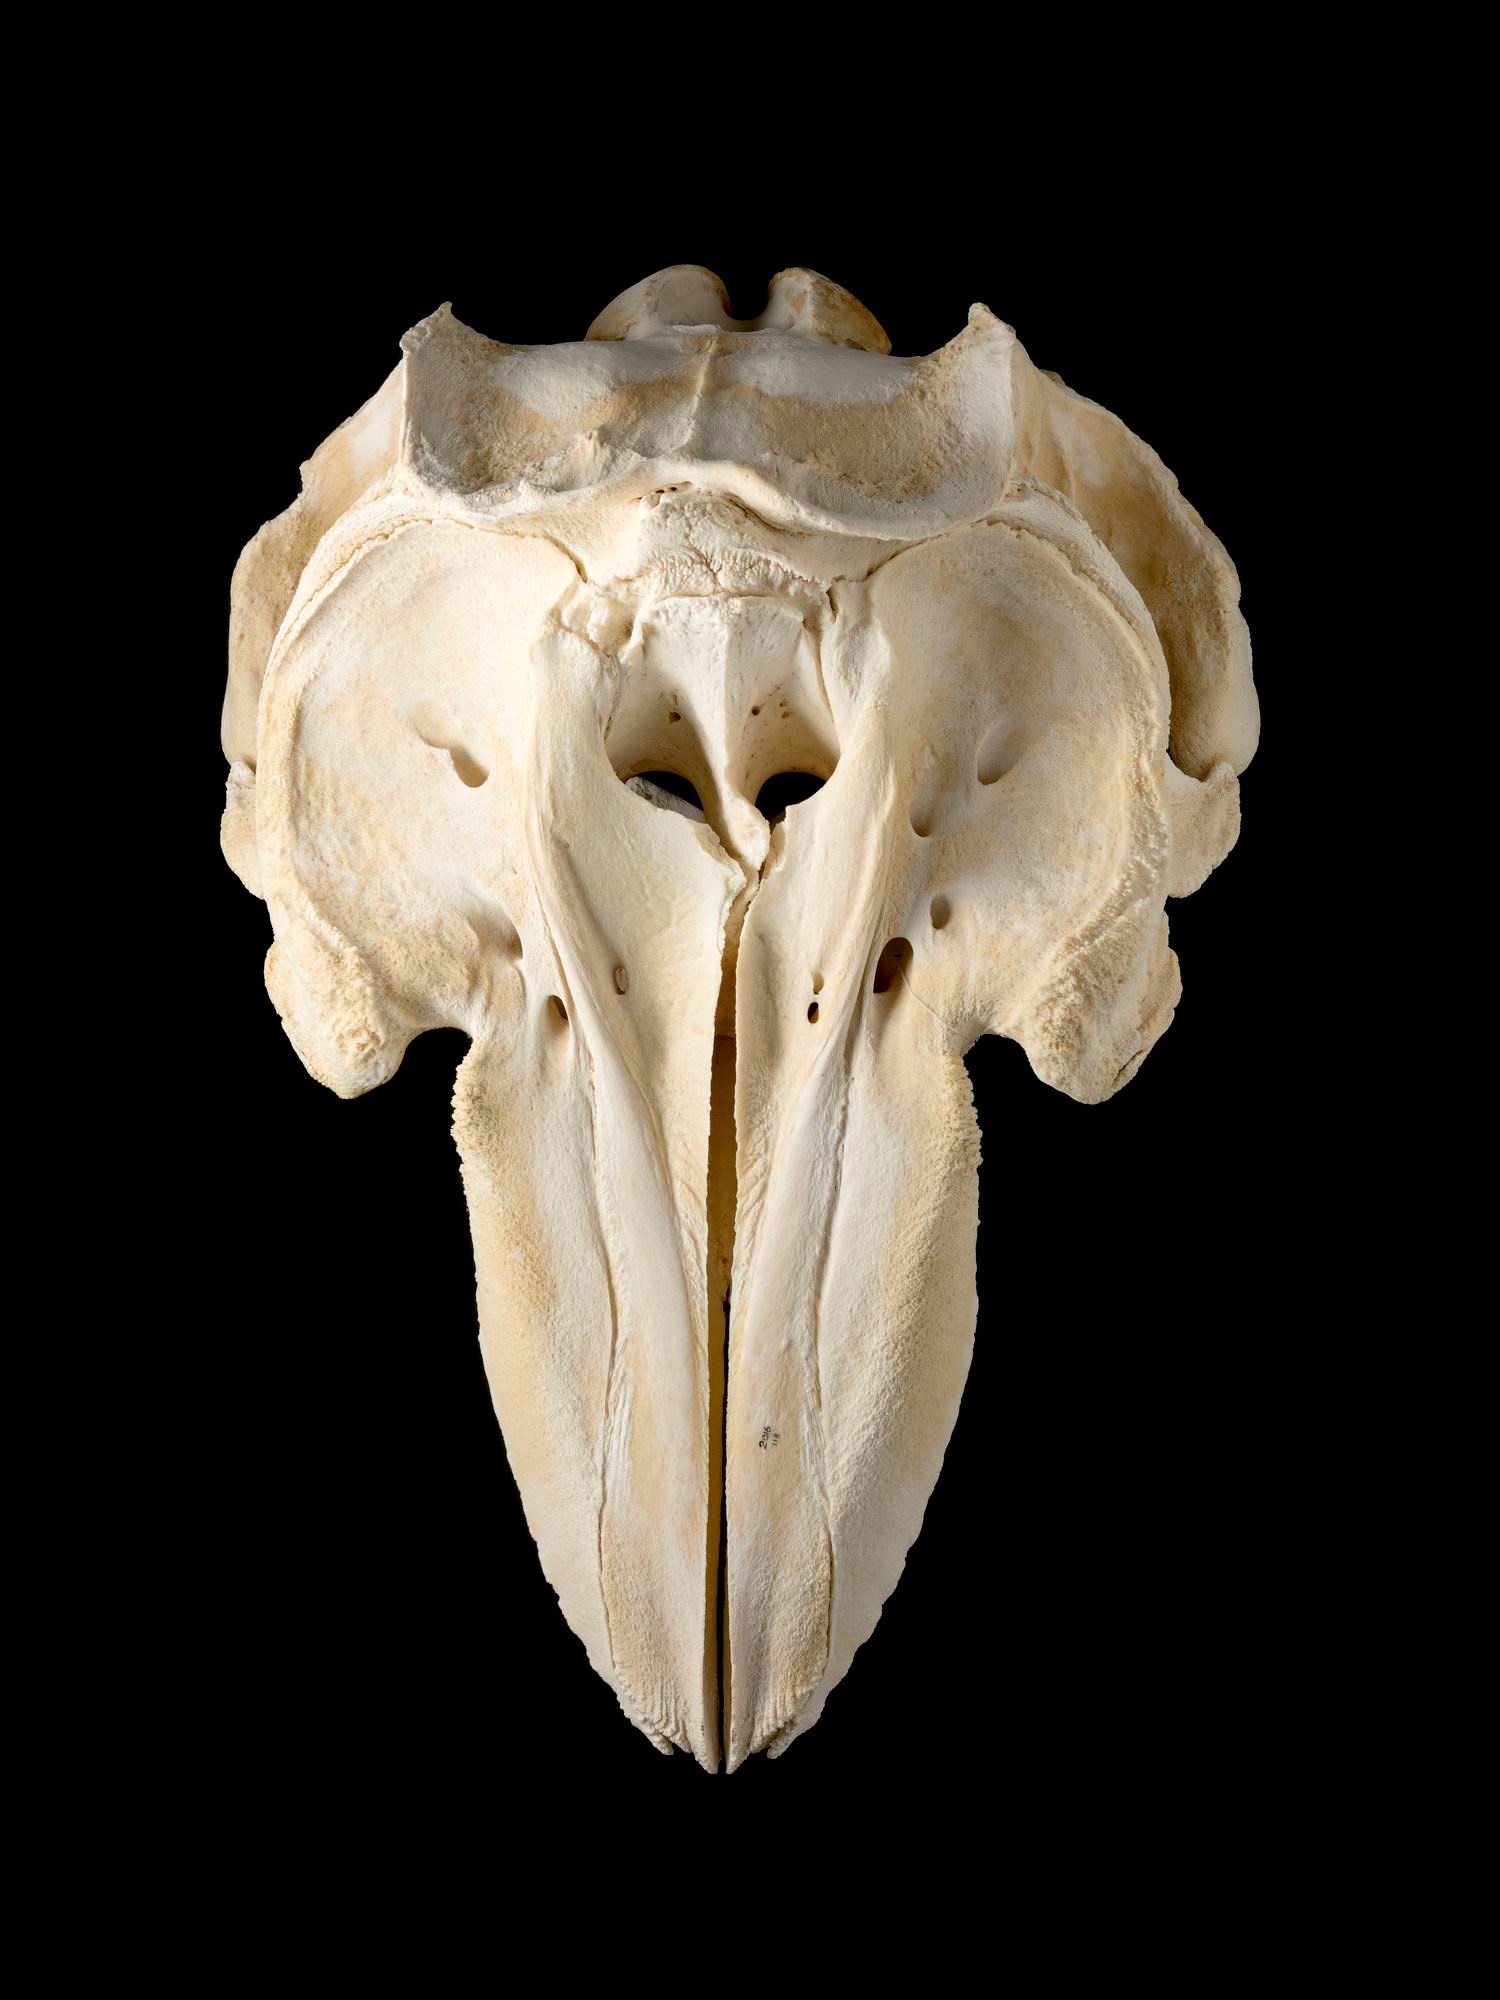 Skeleton of the skull of Lulu the orca